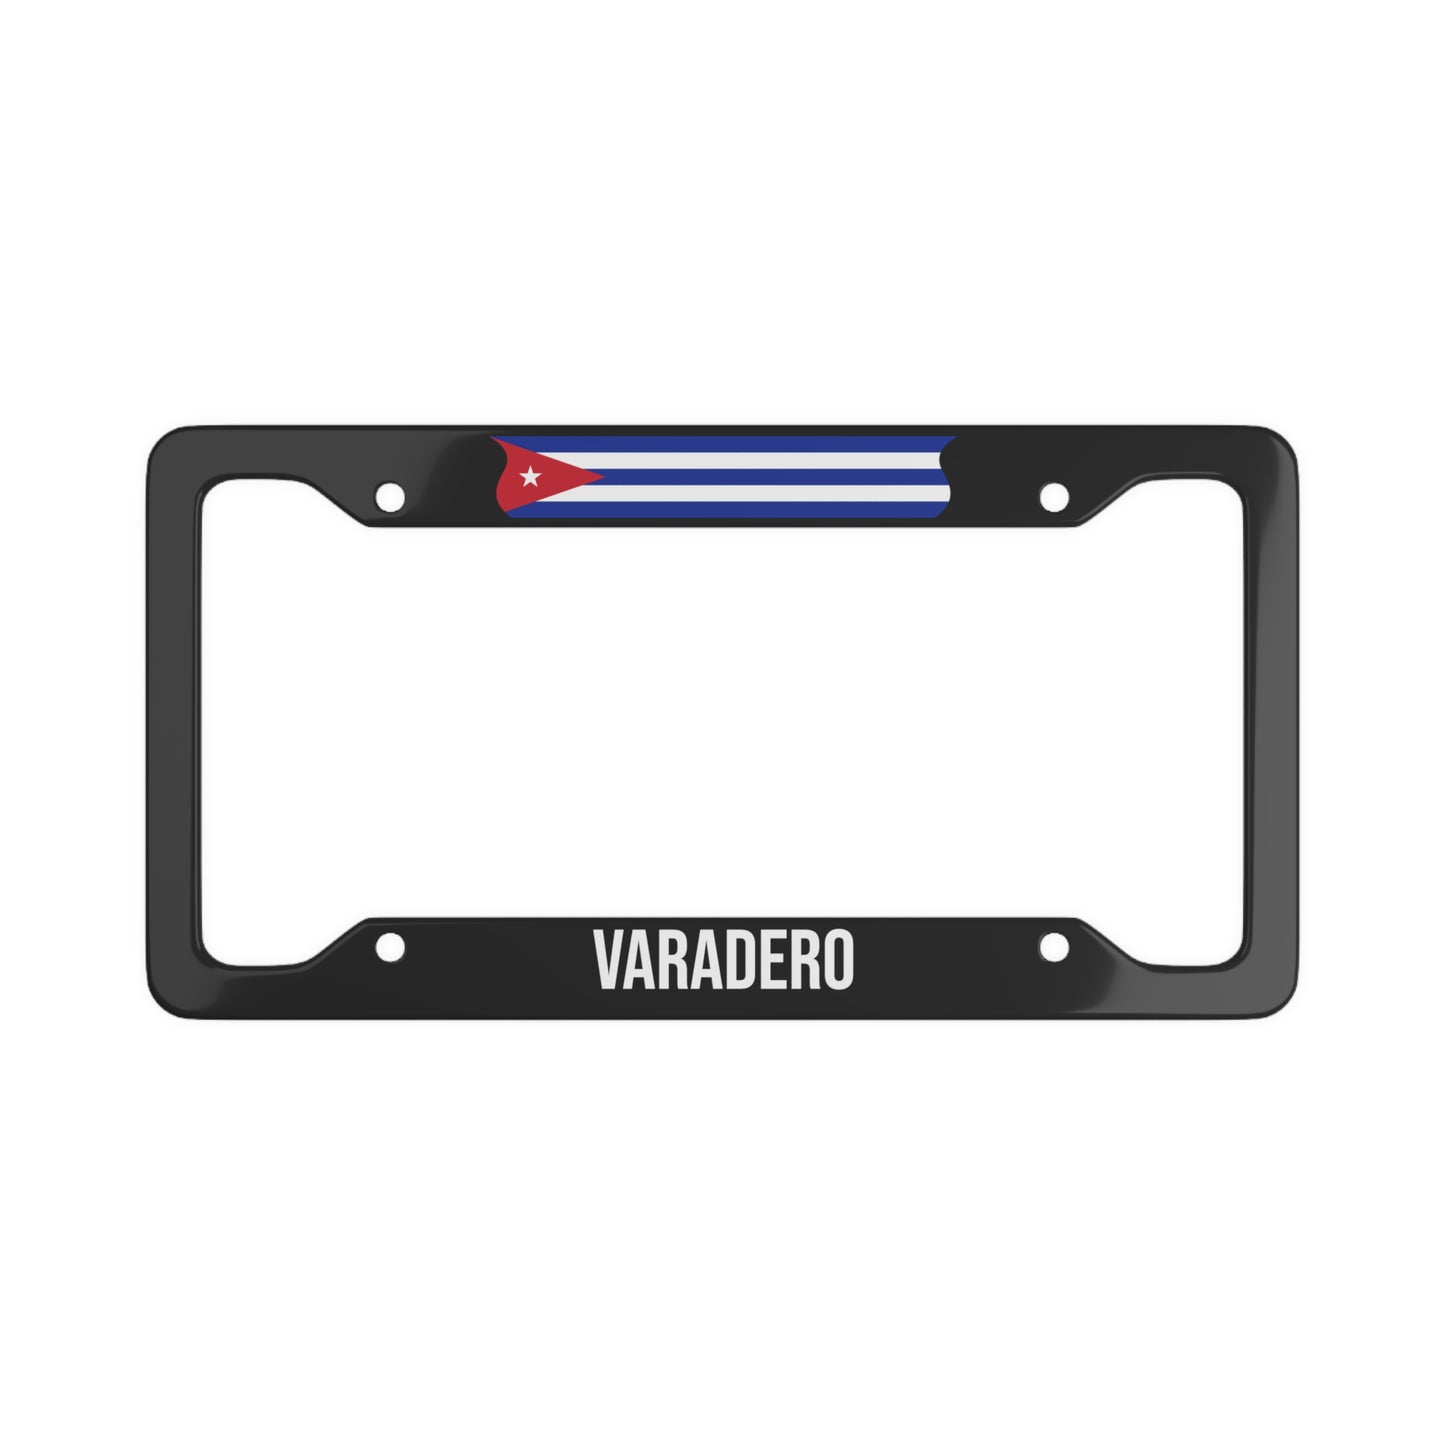 Varadero, Cuba Car Plate Frame